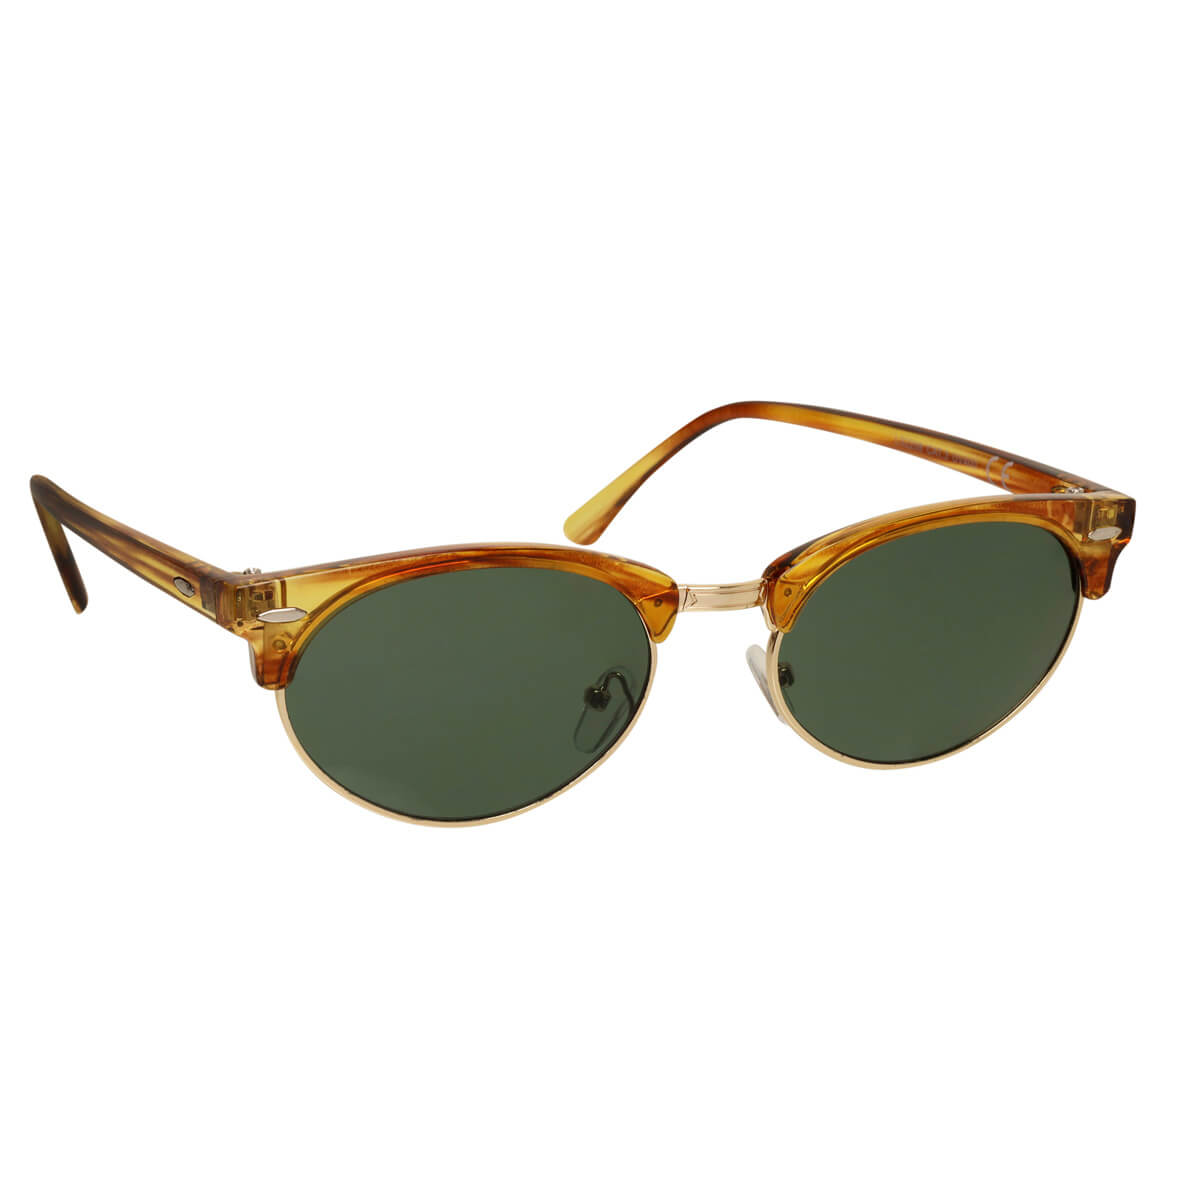 Ovals clubmaster sunglasses